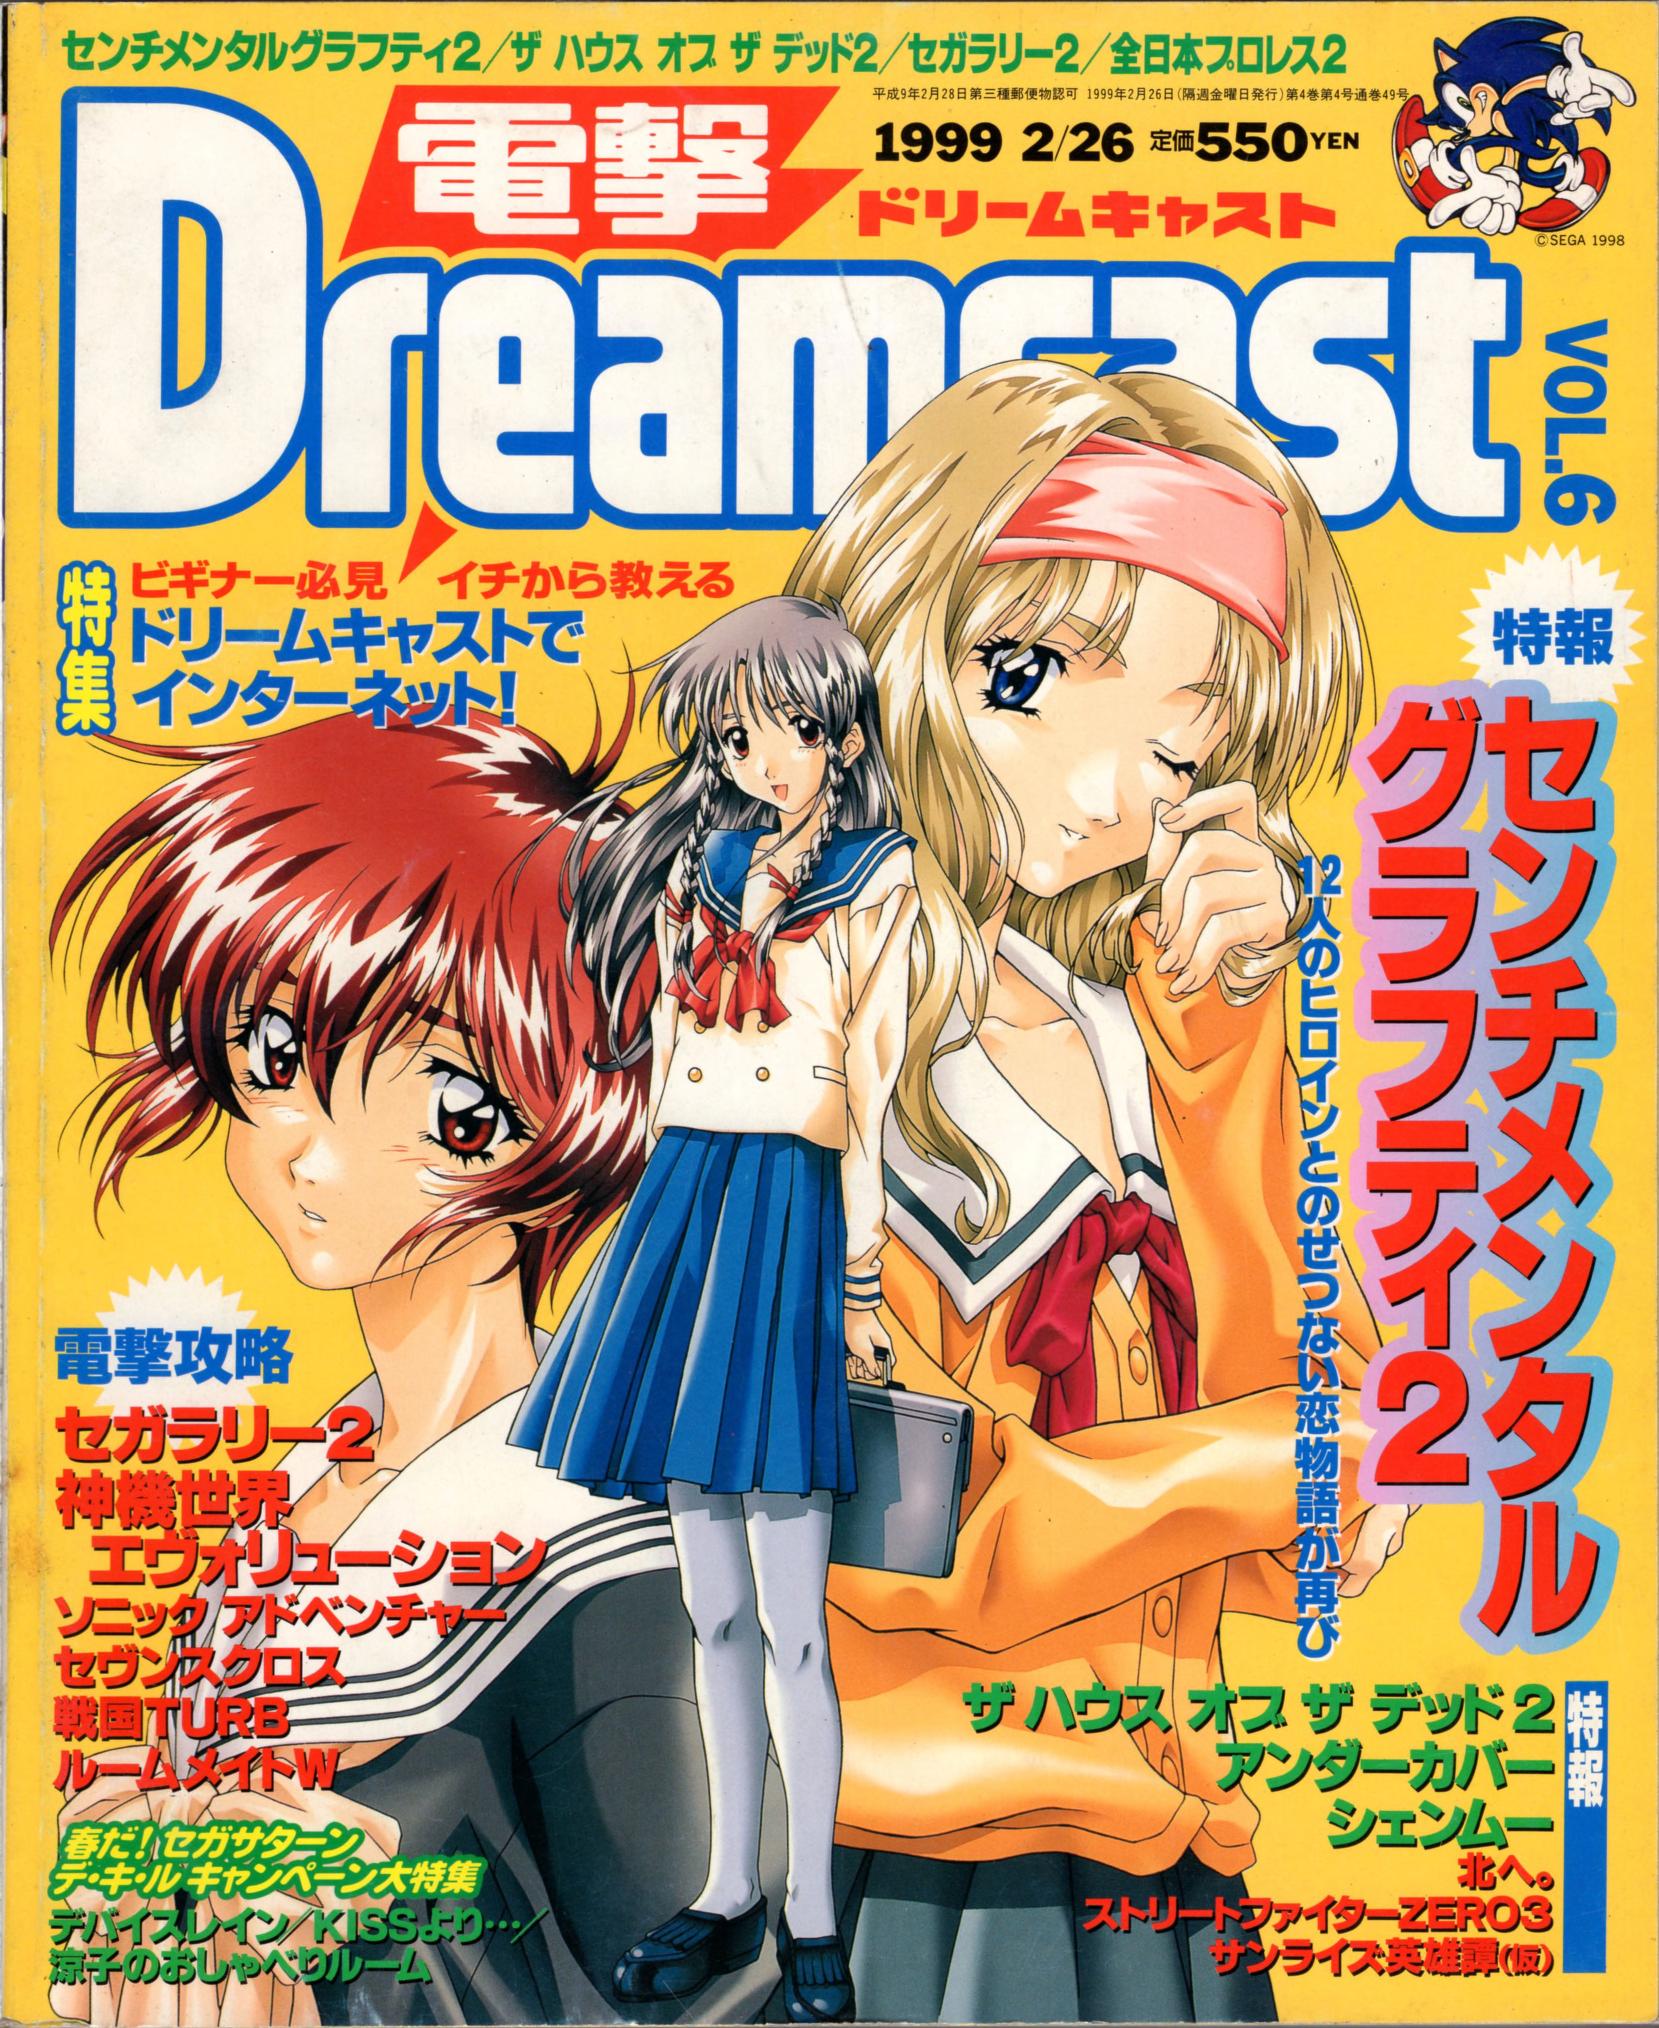 Dengeki Dreamcast Vol. 6 ( 1999 02 26) : Free Download, Borrow 